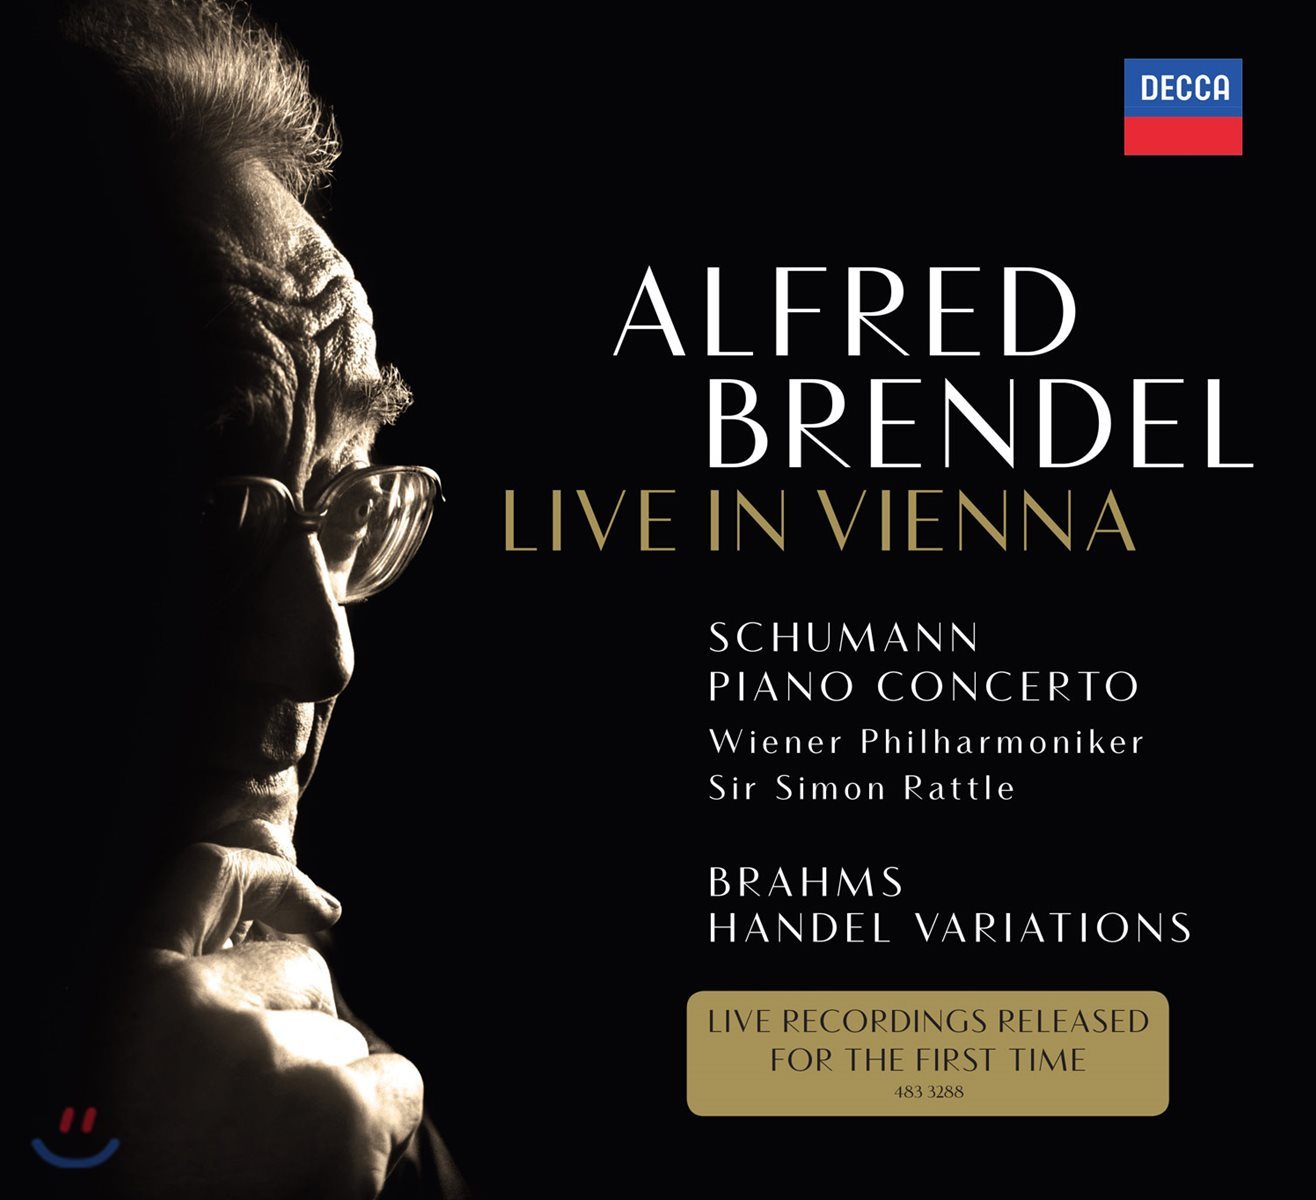 Alfred Brendel 알프레드 브렌델 오스트리아 방송 미발매 녹음 - 슈만: 협주곡 / 브람스: 헨델 변주곡 (Live in Vienna - Schumann / Brahms)